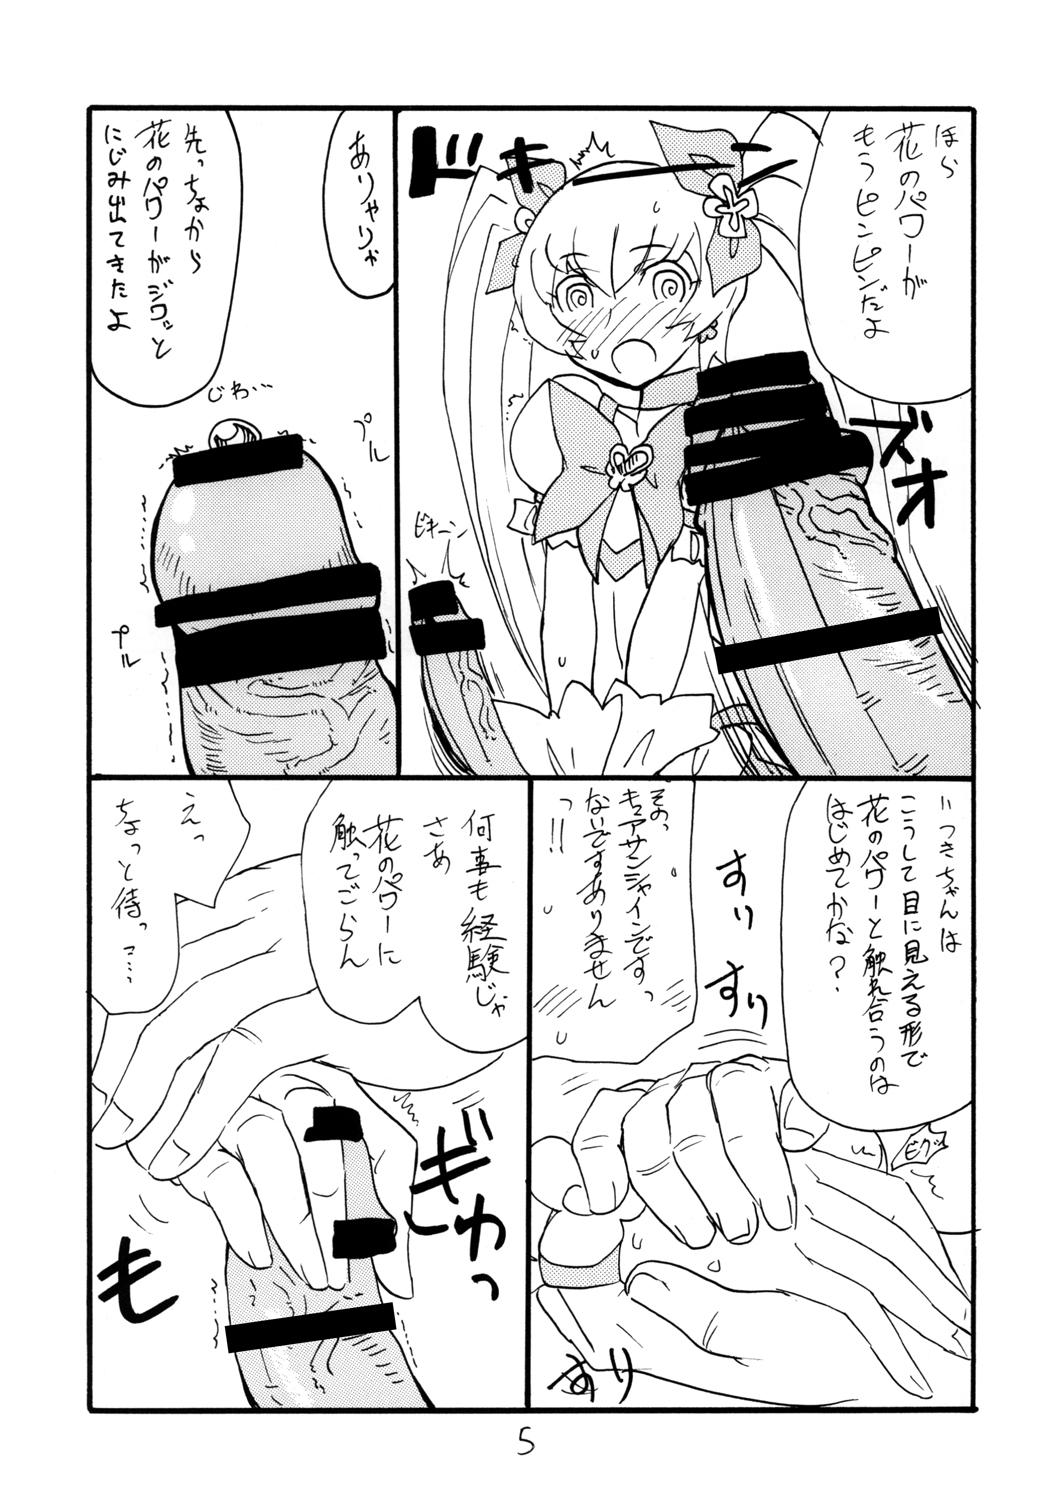 Gorda Dopyutto Atsumare Hana no Power - Heartcatch precure Storyline - Page 5